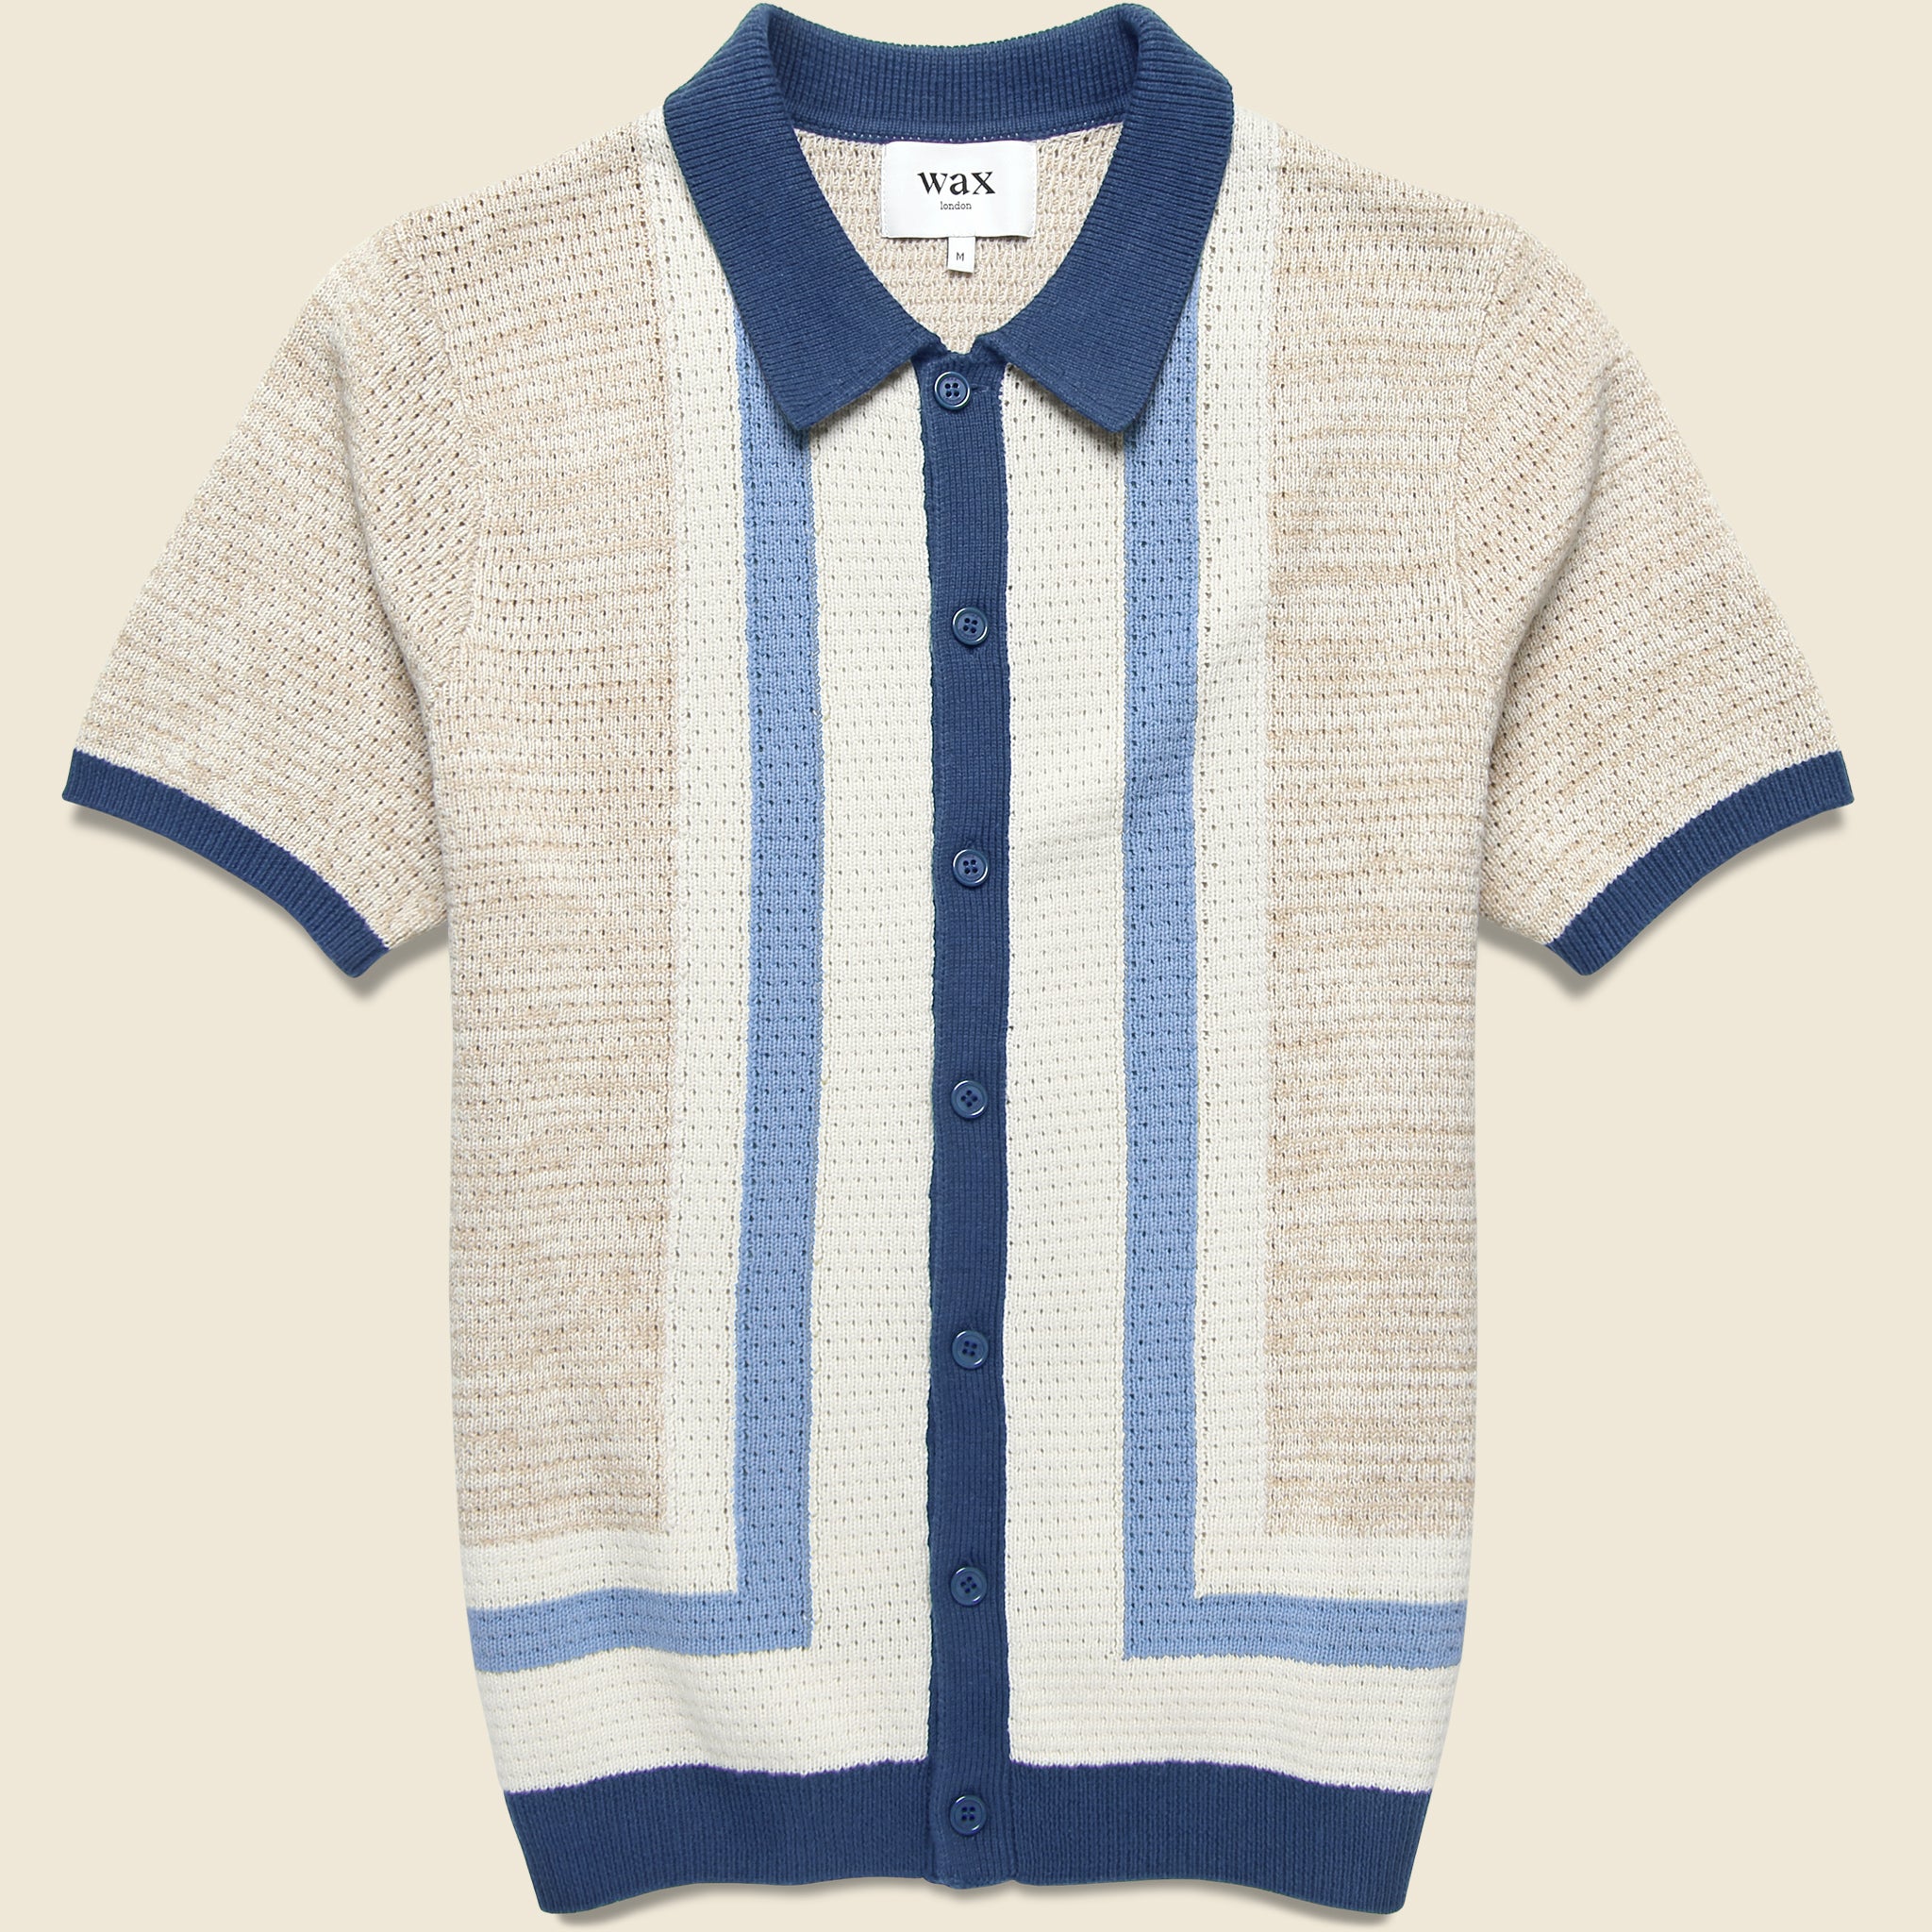 Tellaro Open Knit Shirt - Blue/Ecru - Wax London - STAG Provisions - Tops - S/S Knit